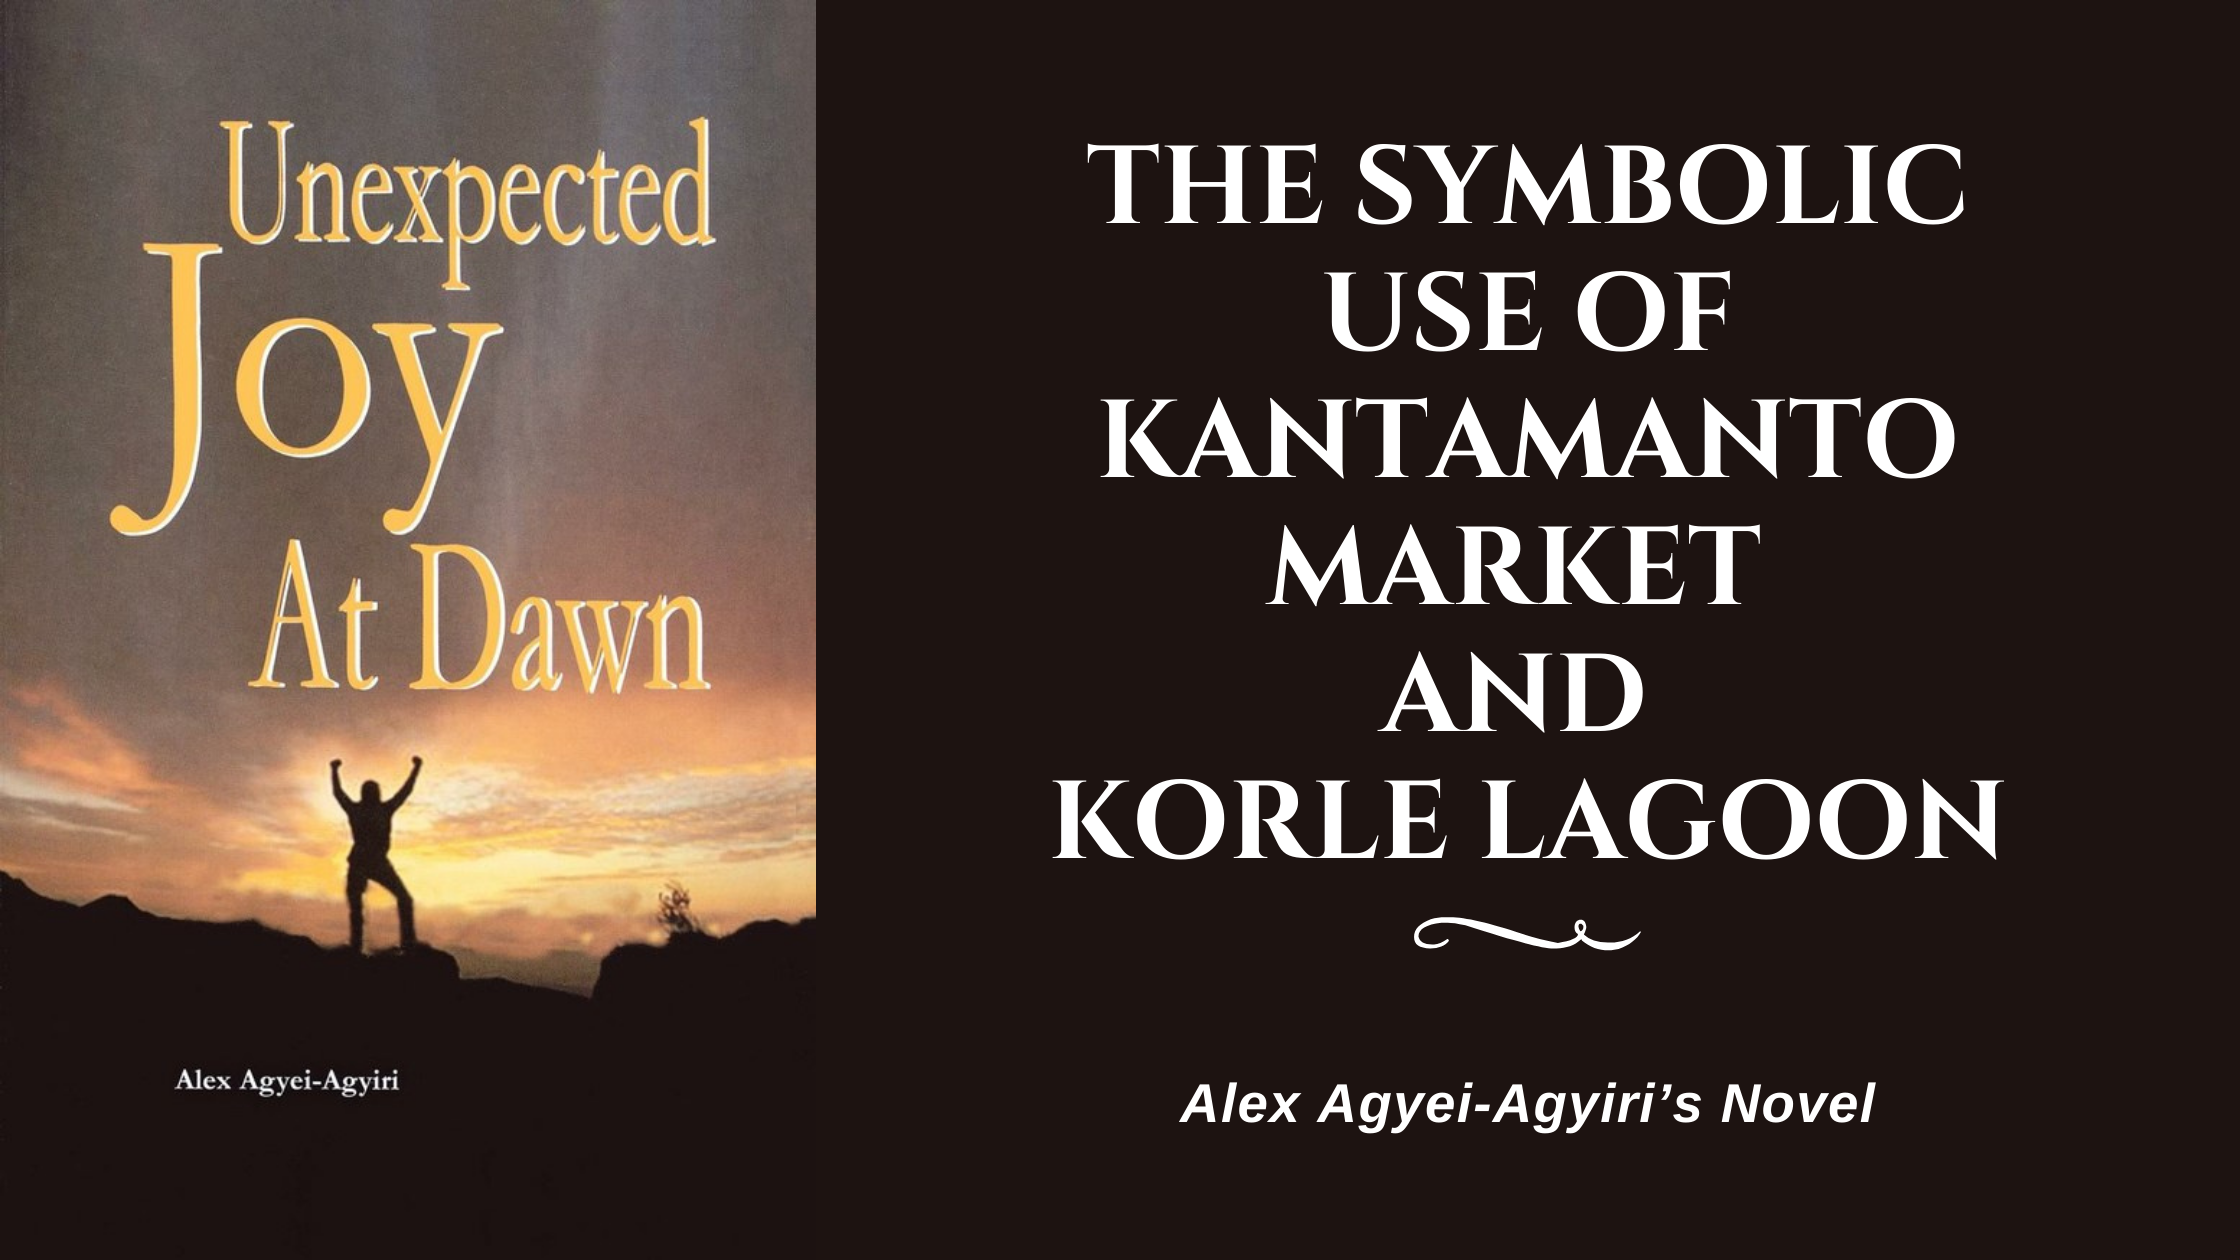 The Symbolic Use of Kantamanto Market and Korle Lagoon in UNEXPECTED JOY AT DAWN